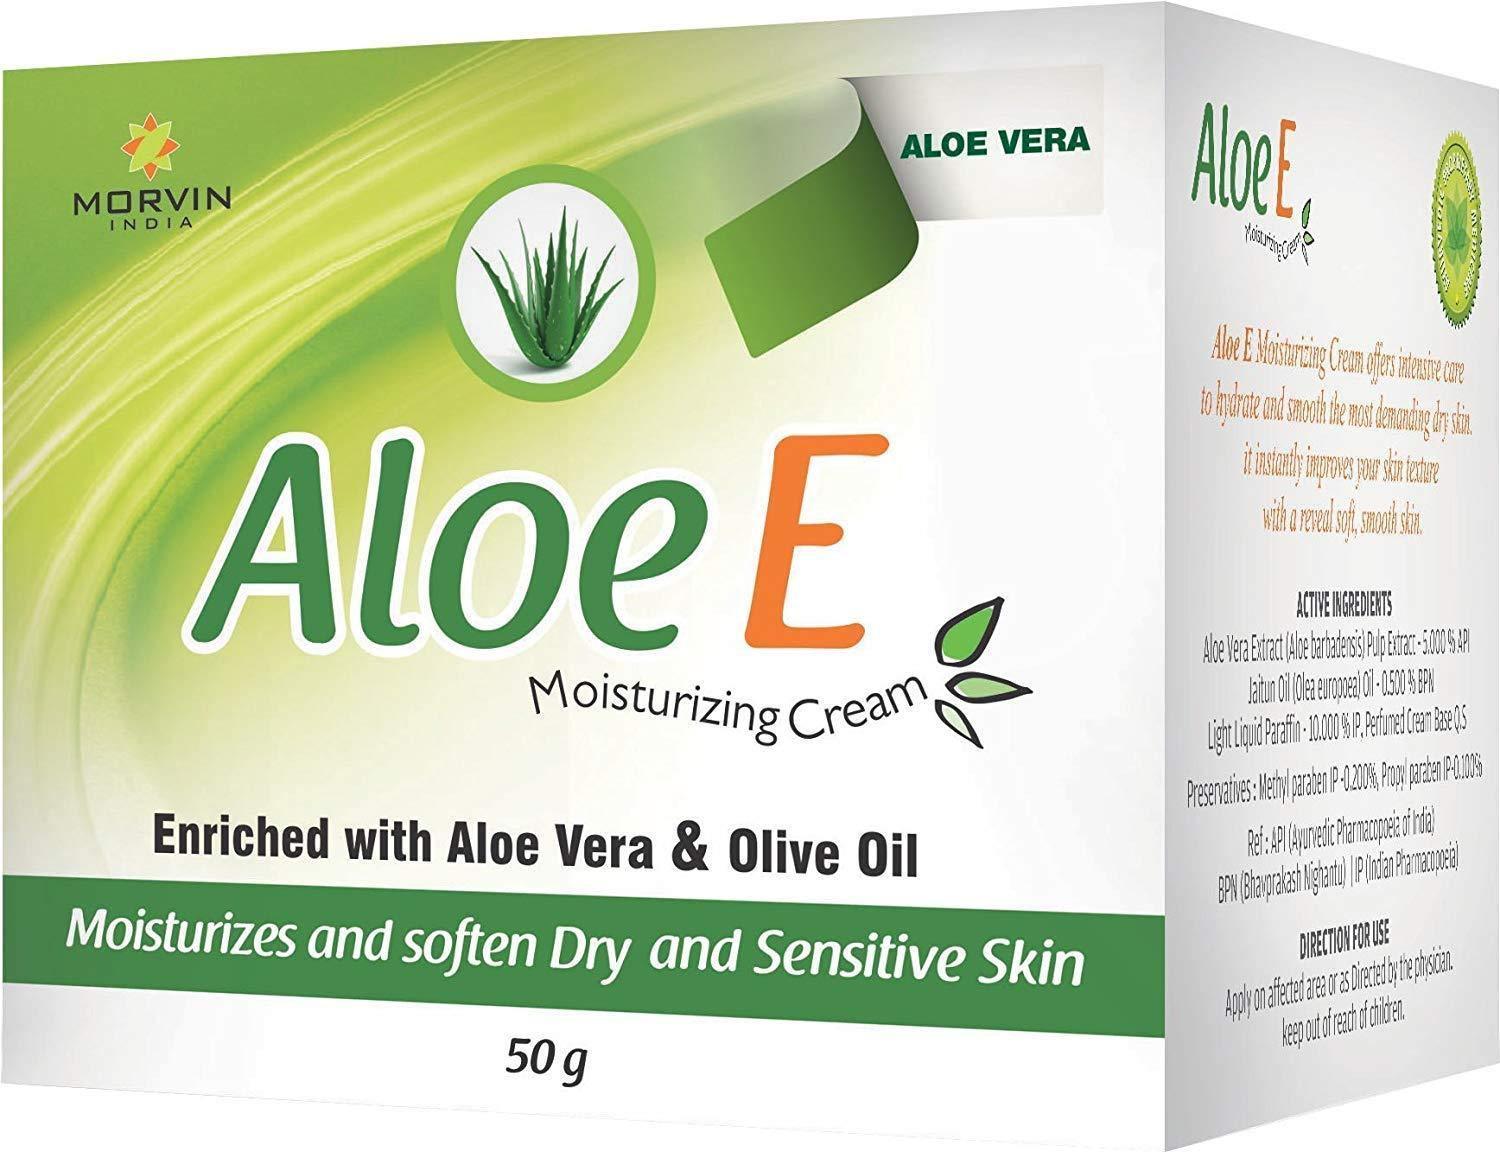 Morvin Aloe E Moisturizing Cream-Health & Personal Care-dealsplant